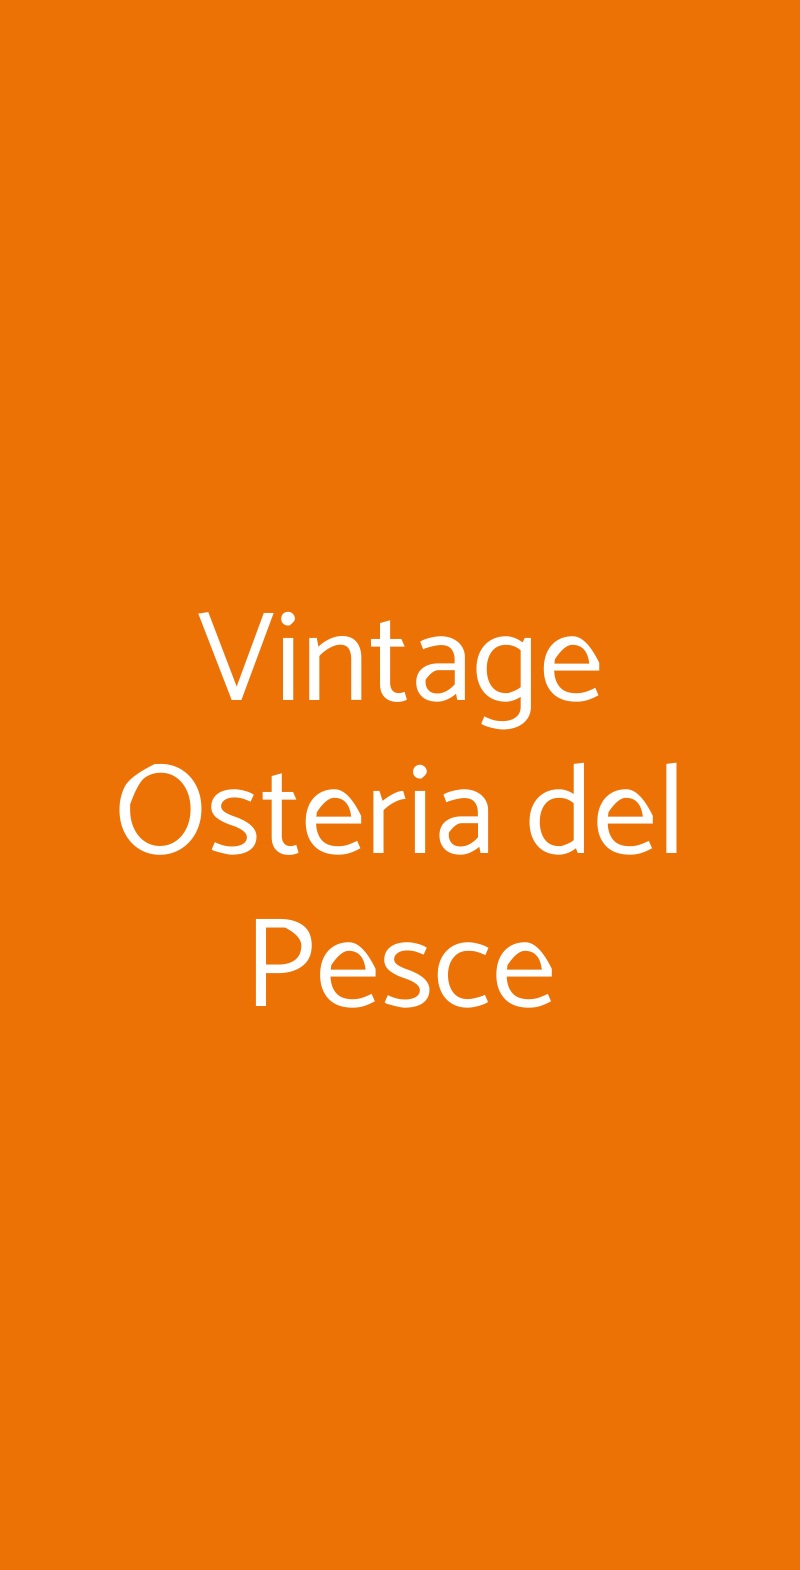 Vintage Osteria del Pesce Castel San Pietro Terme menù 1 pagina